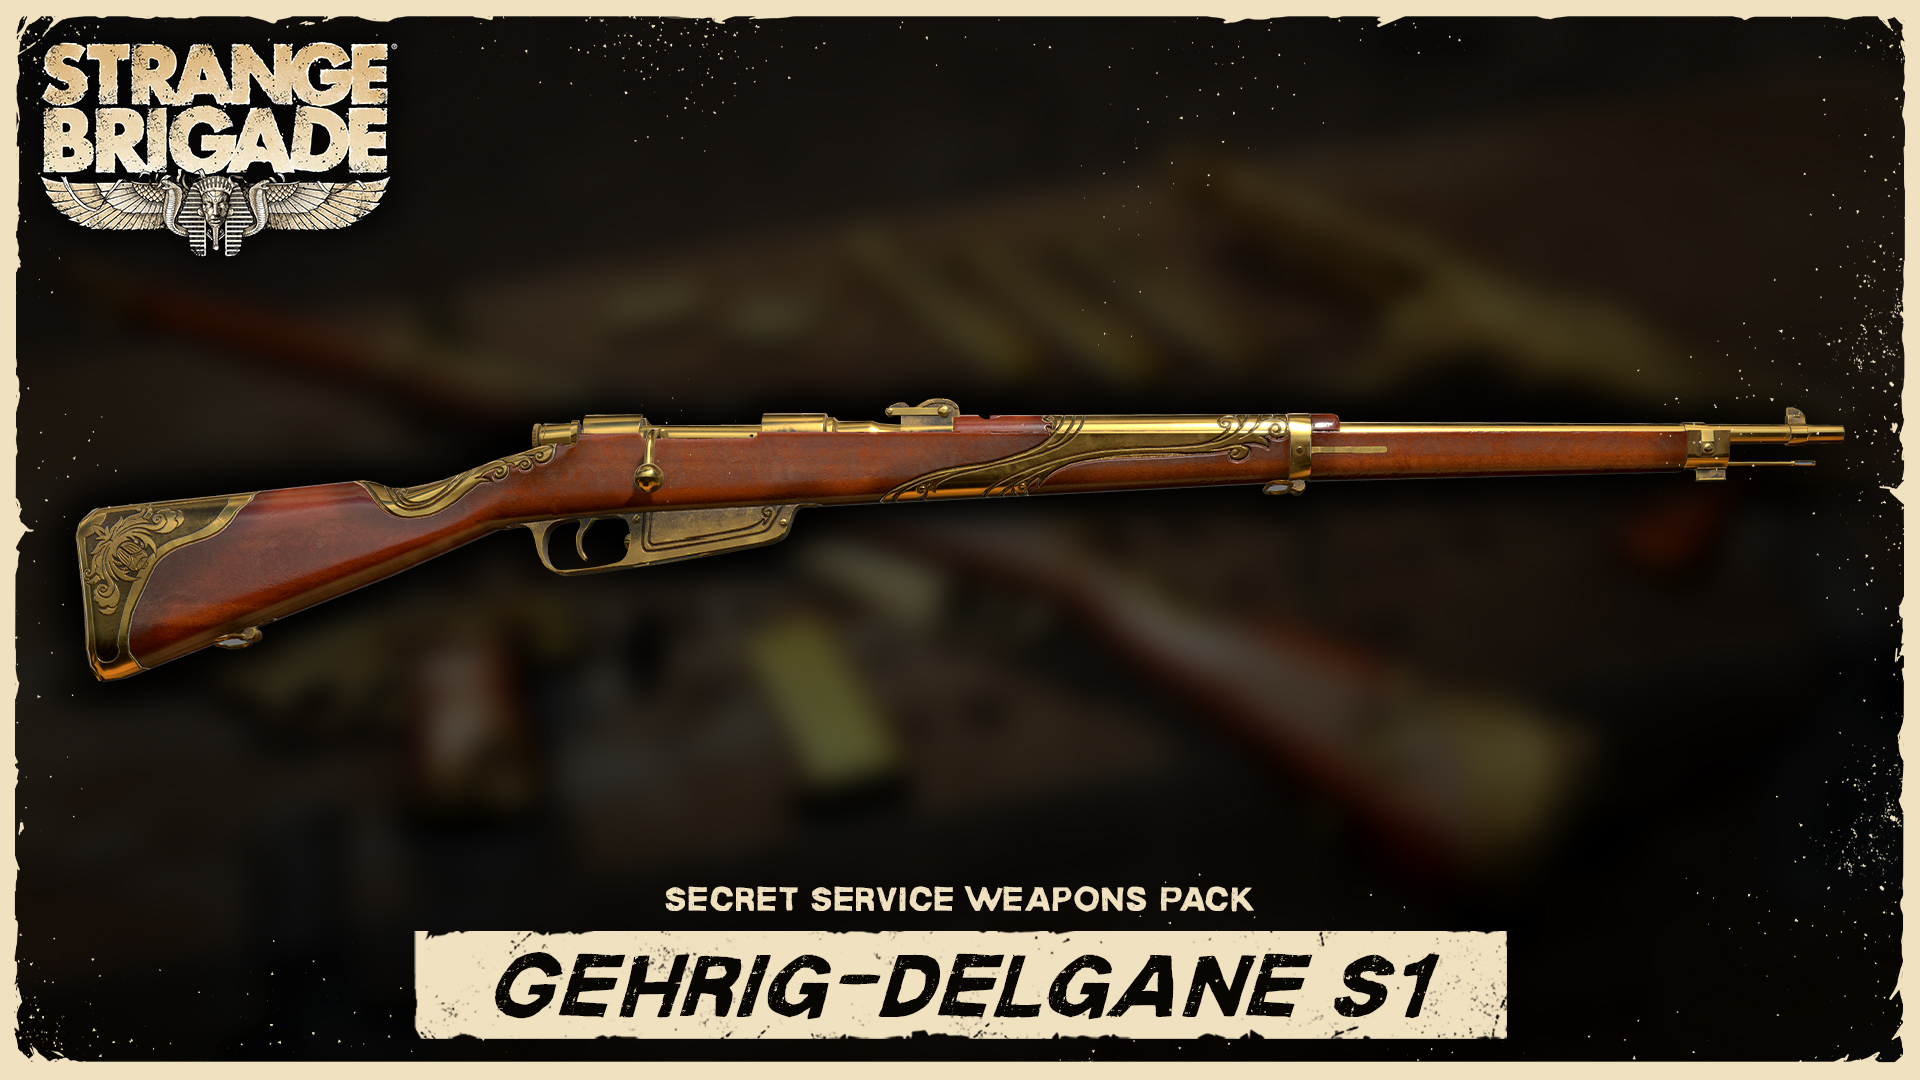 Strange Brigade - Secret Service Weapons Pack Featured Screenshot #1